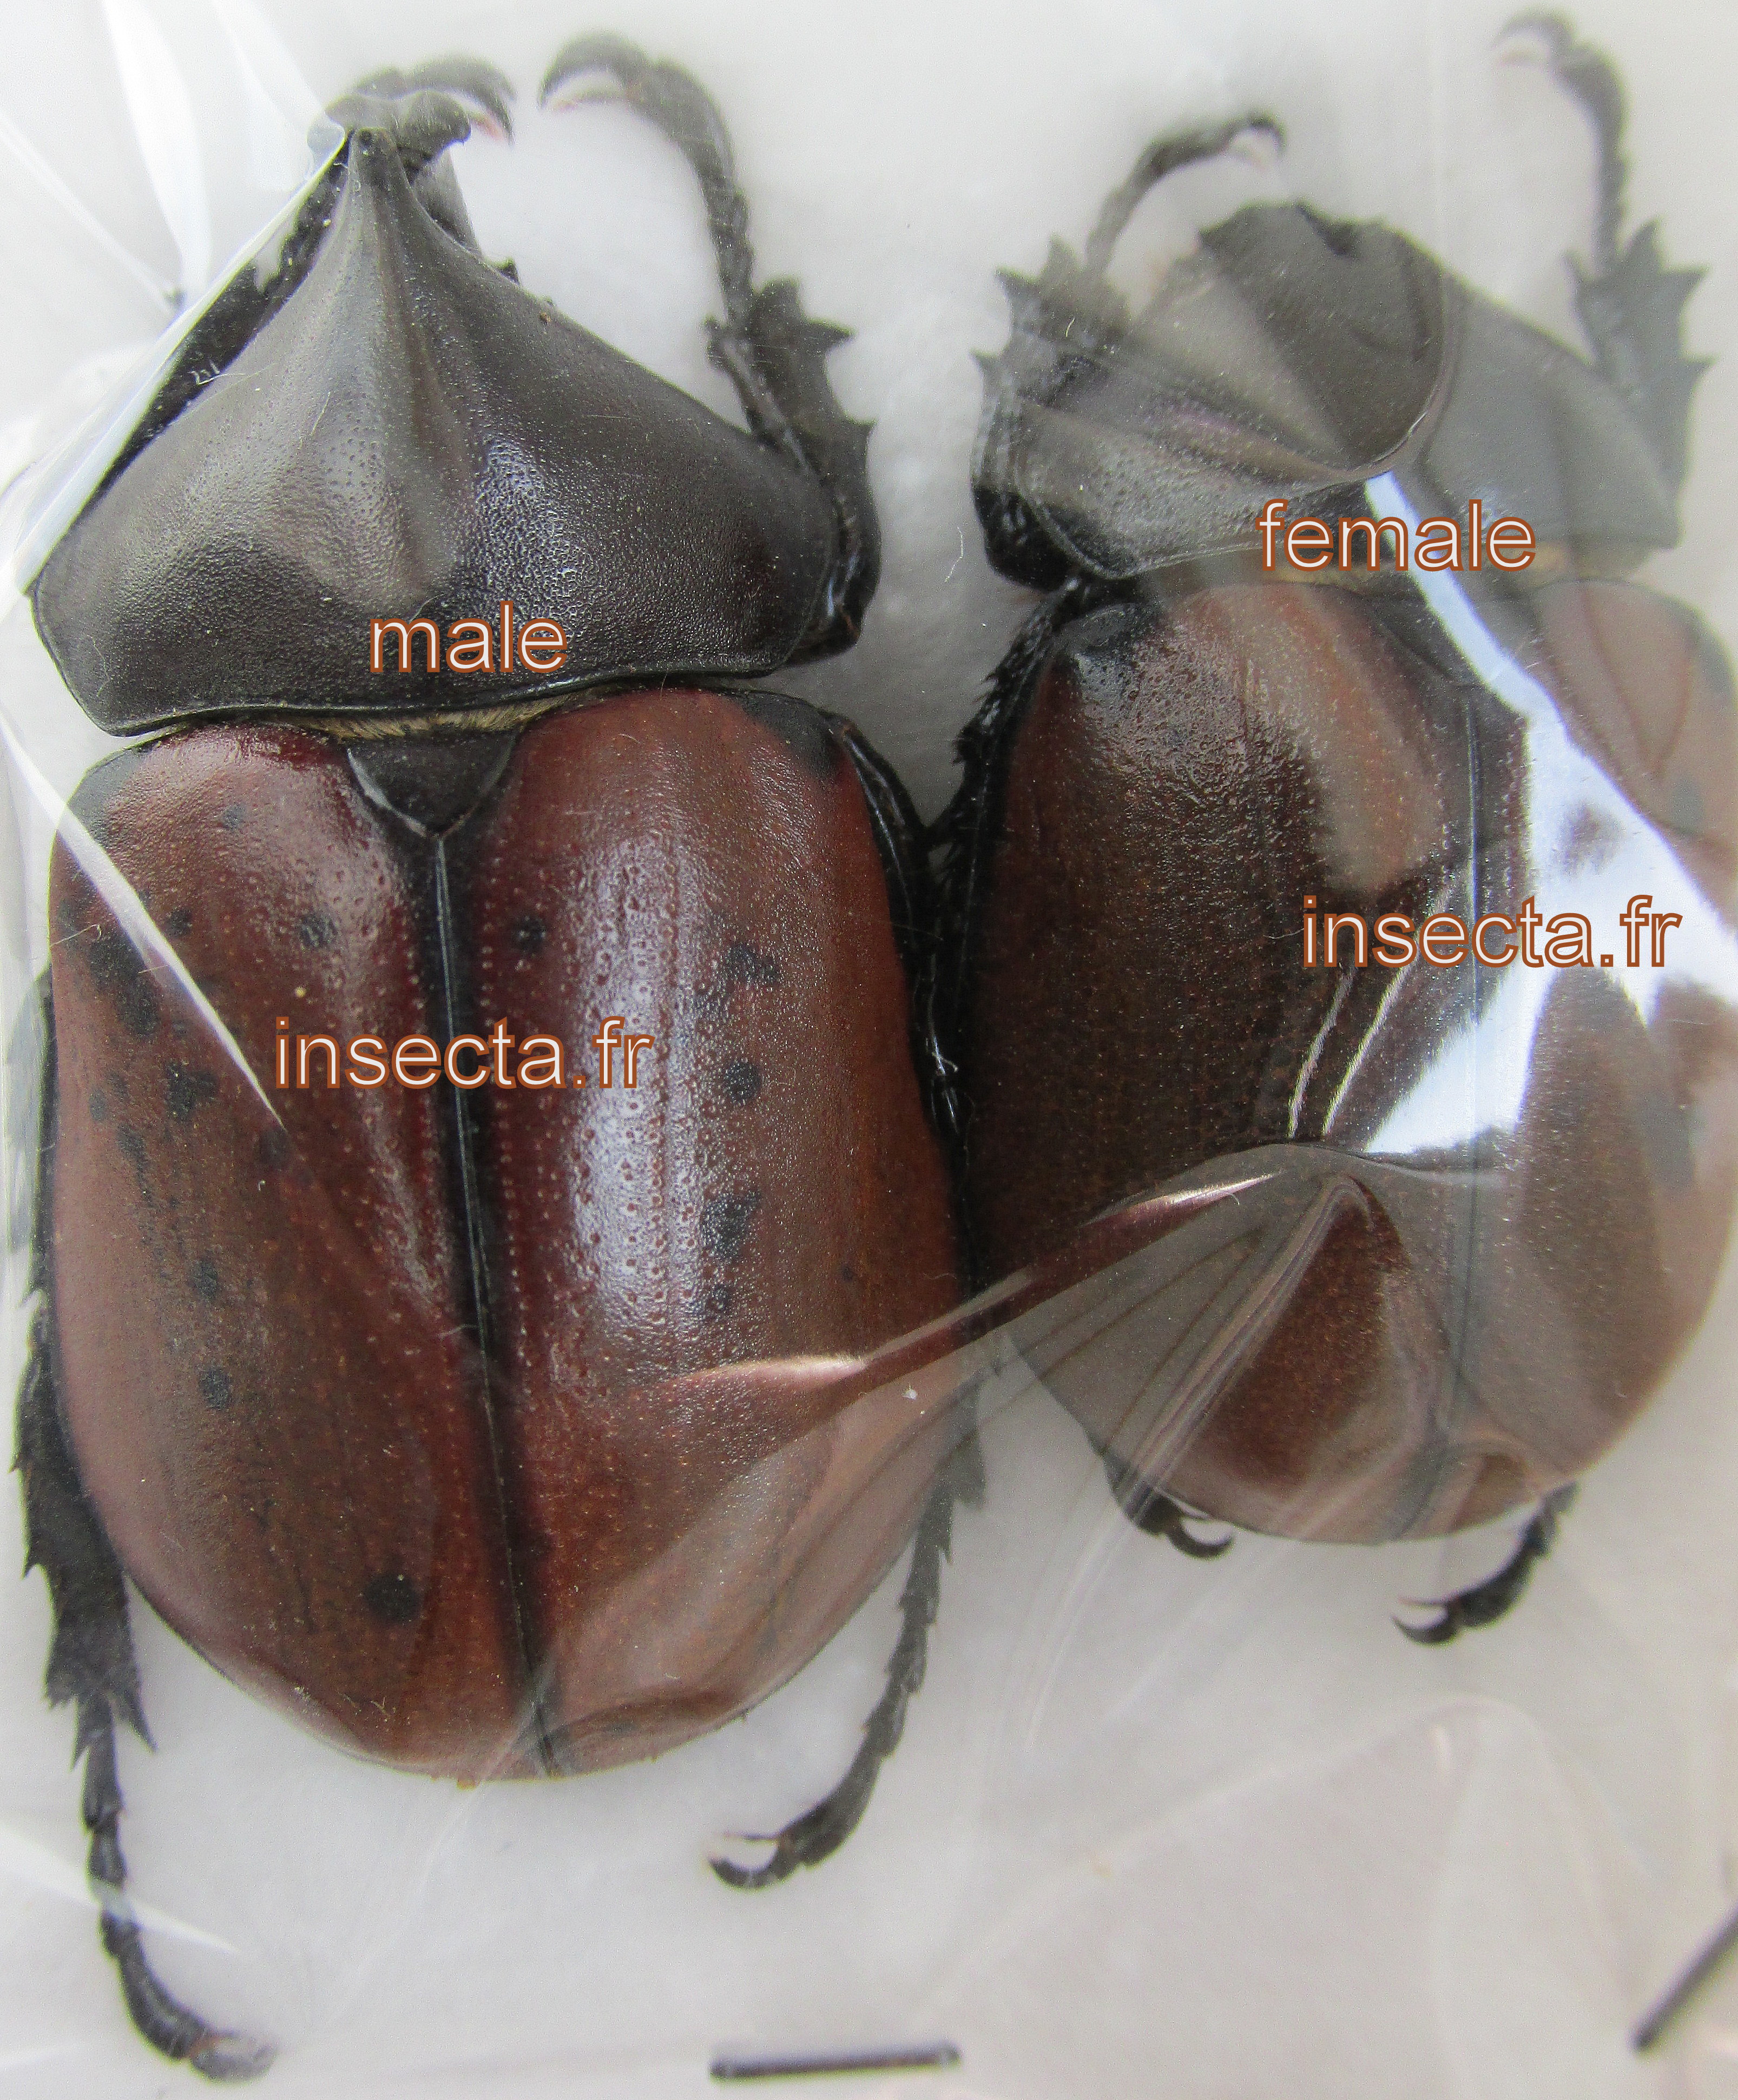 Mitracephala humboldti male